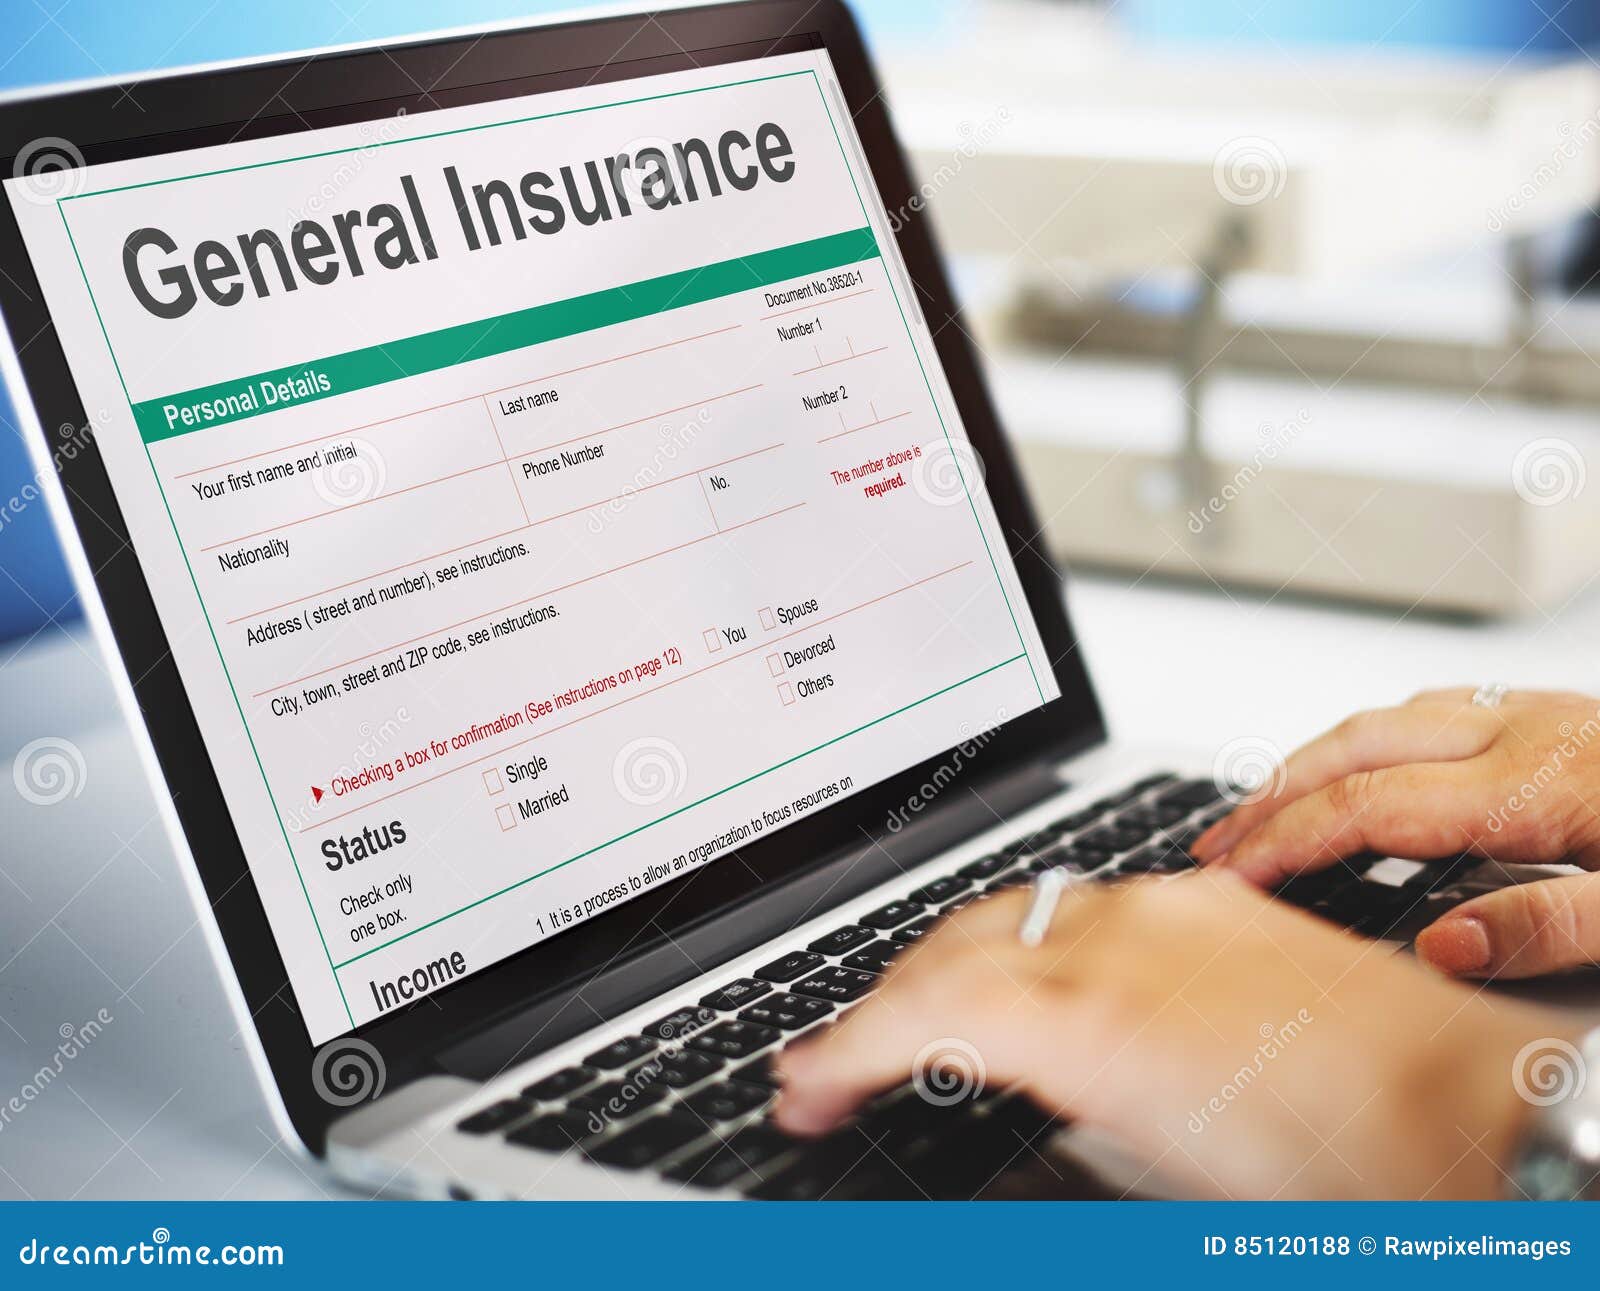 general insurance rebate form information concept